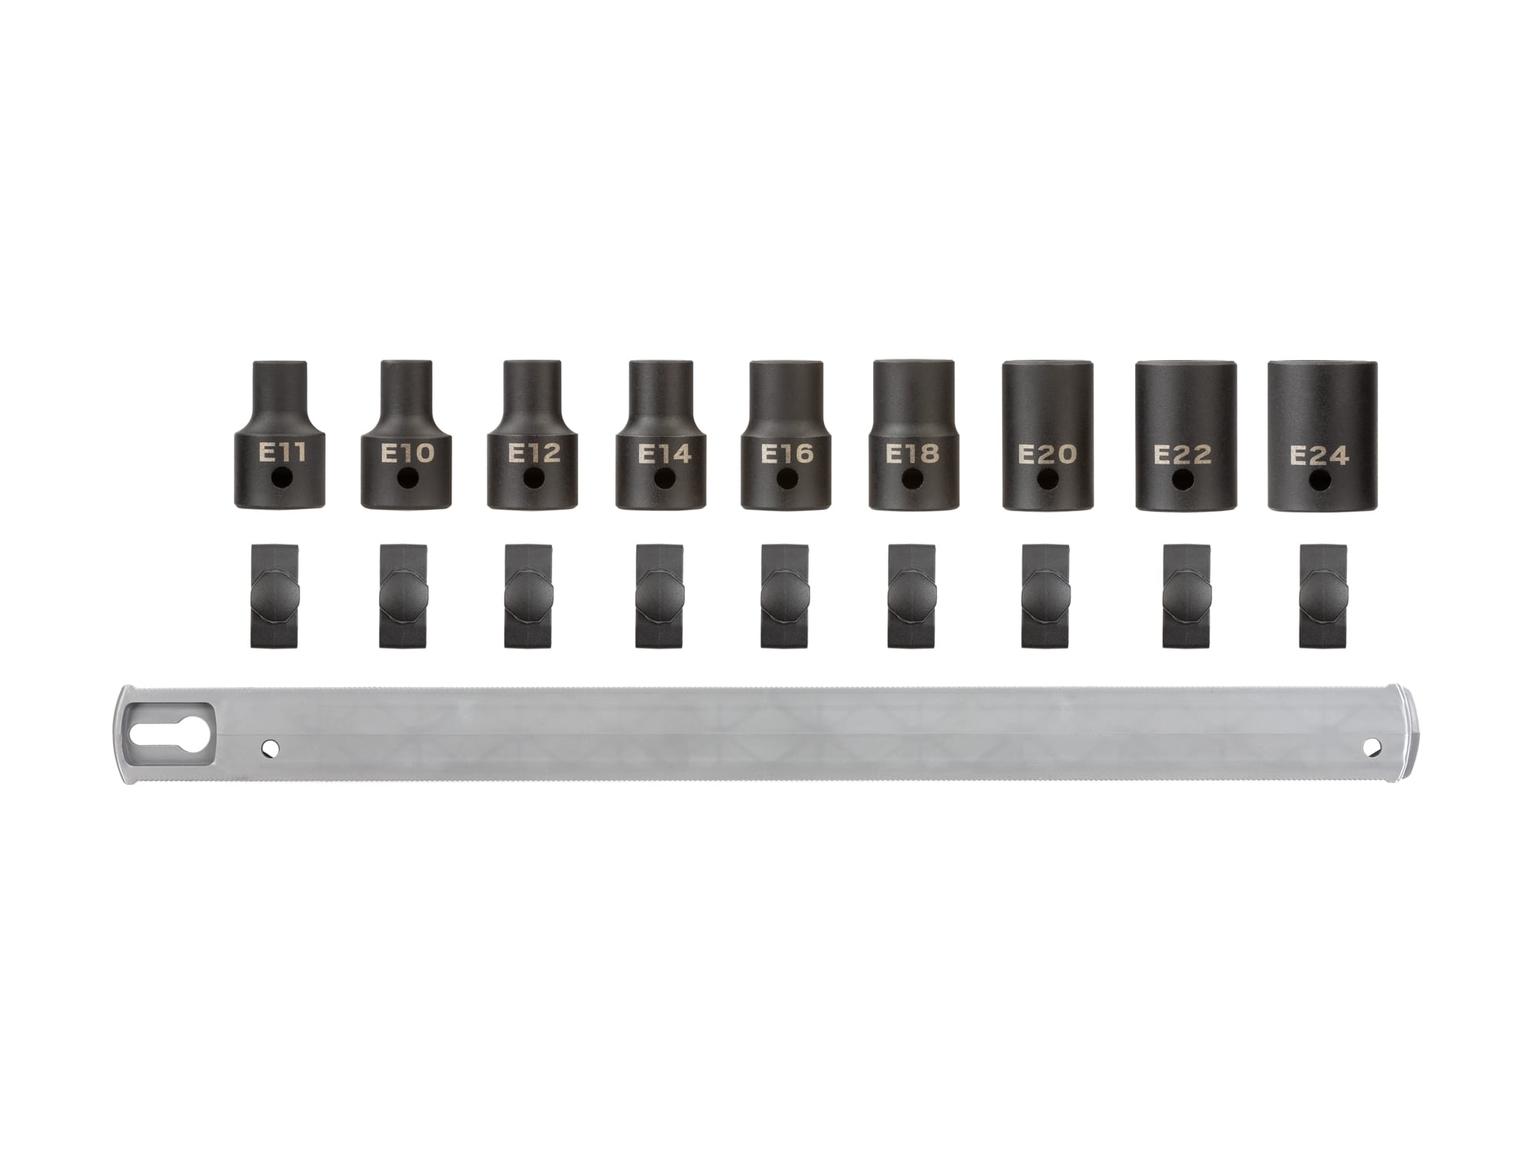 TEKTON SID92100-T 1/2 Inch Drive External Star Impact Socket Set with Rail, 9-Piece (E10-E24)